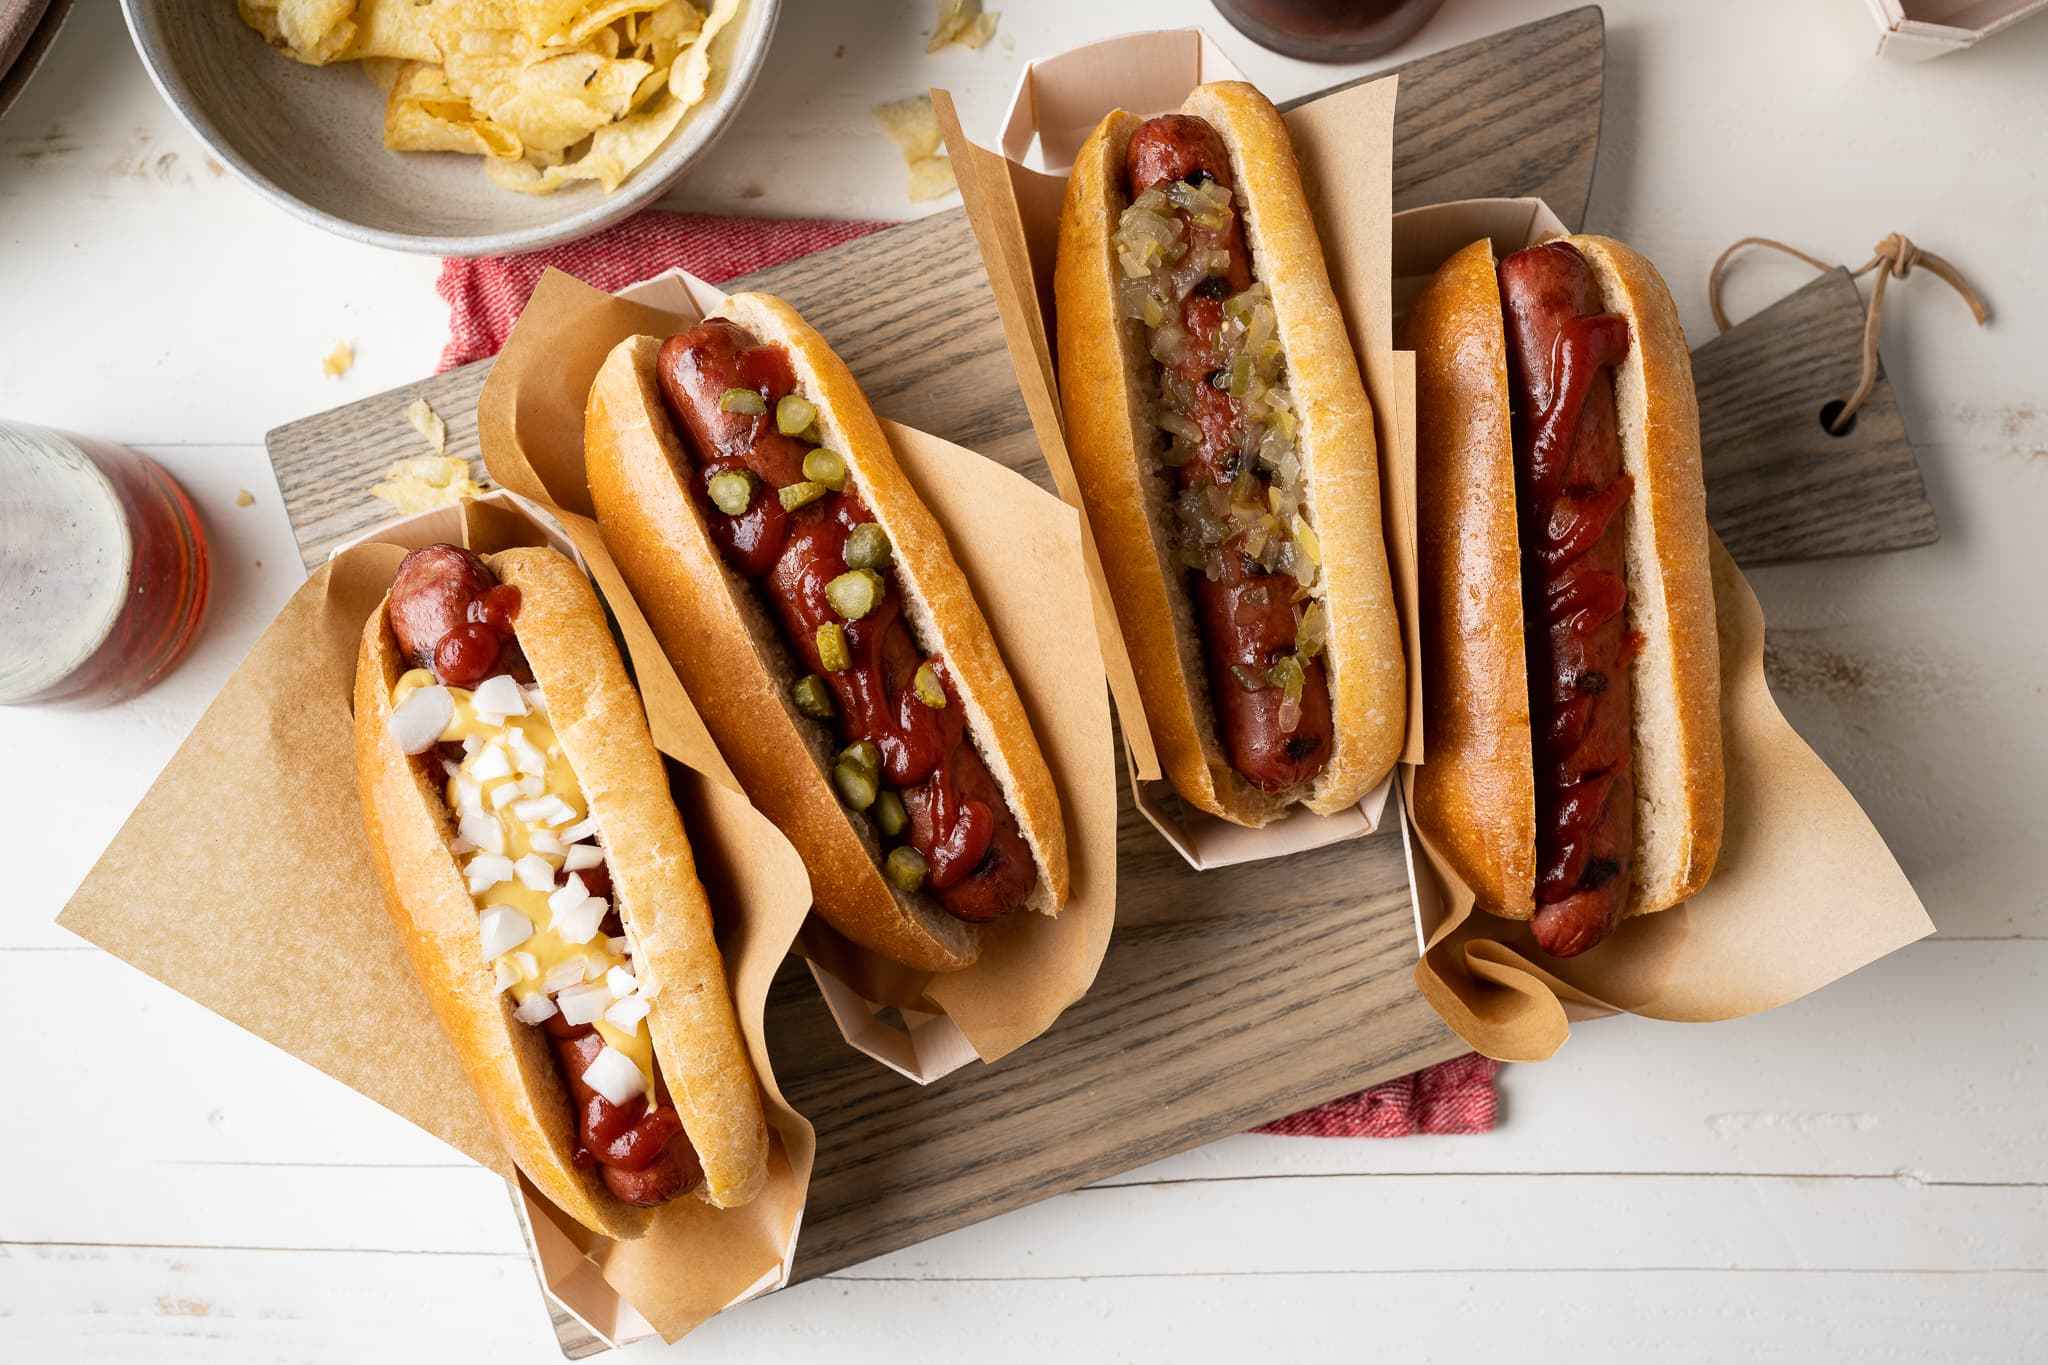 12 ideias de Hotdogueria  cachorro-quente gourmet, sanduíches deliciosos,  culinaria